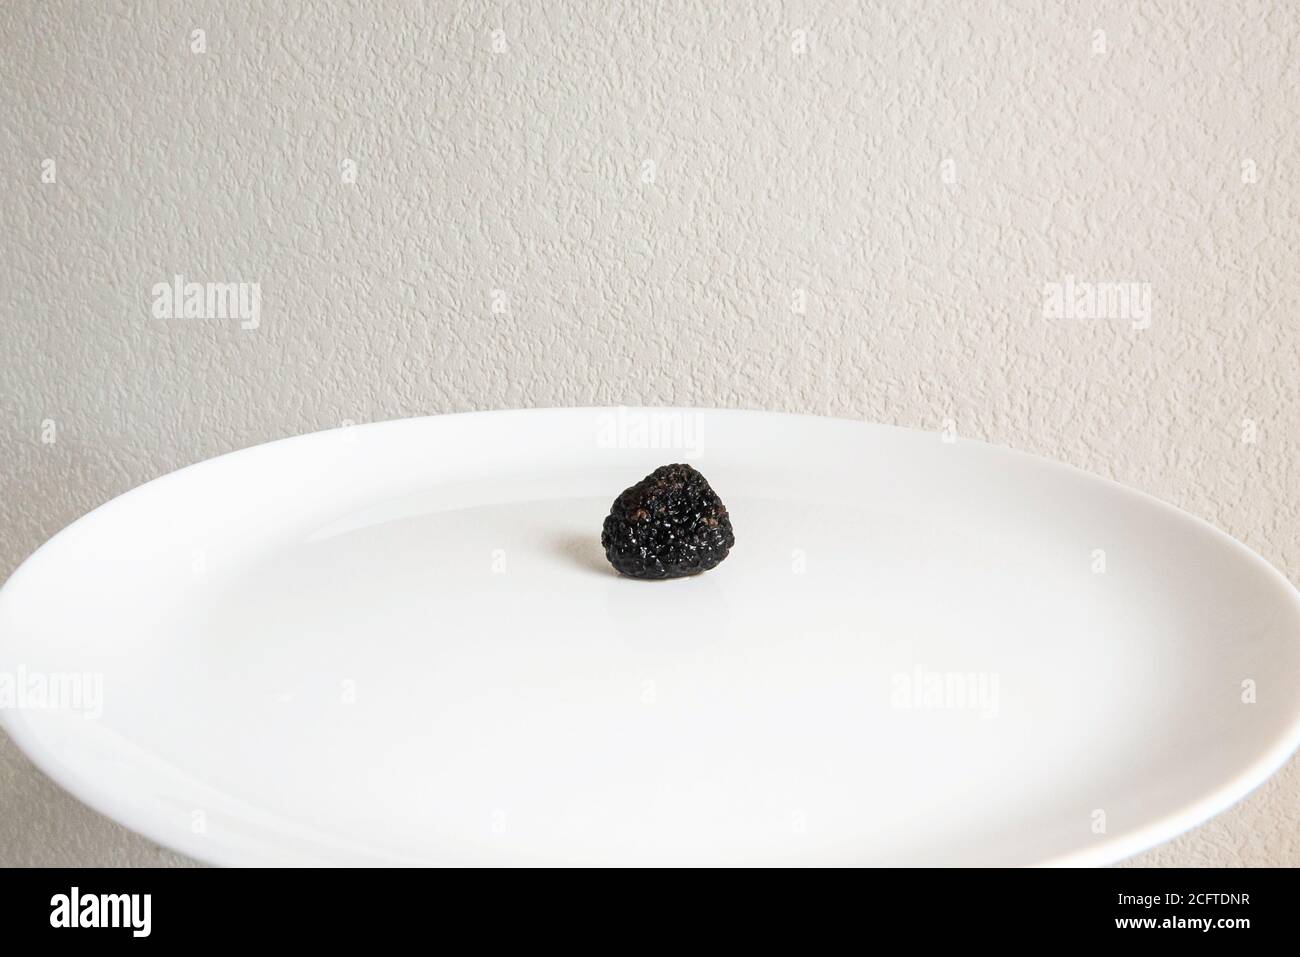 Rare Delicacy mushroom black truffle Stock Photo